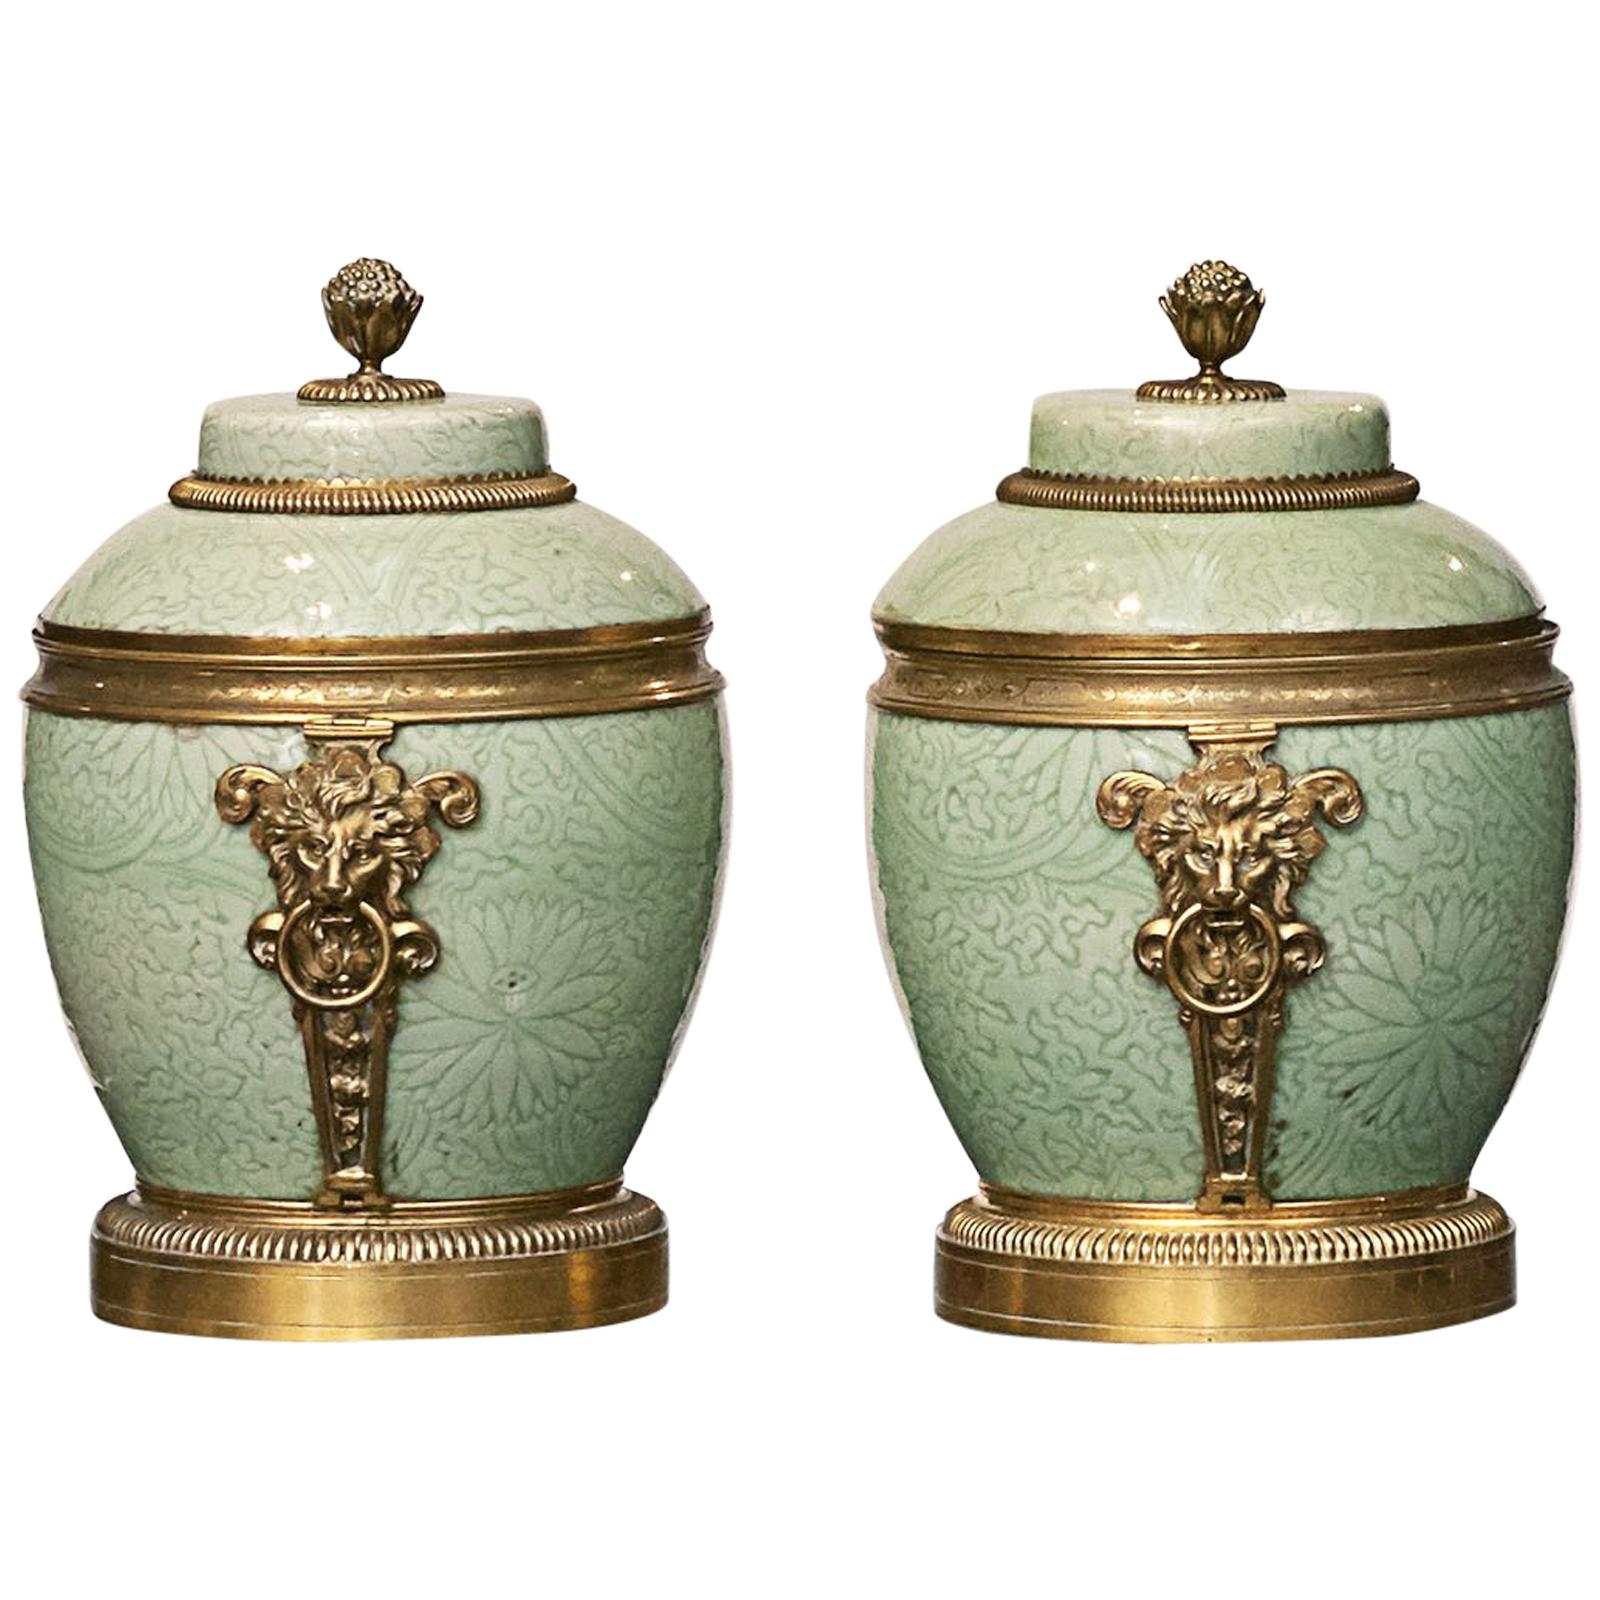 Pair of Regence Gilt-Bronze Green Glazed porcelain Mounted Celadon Lidded Vases